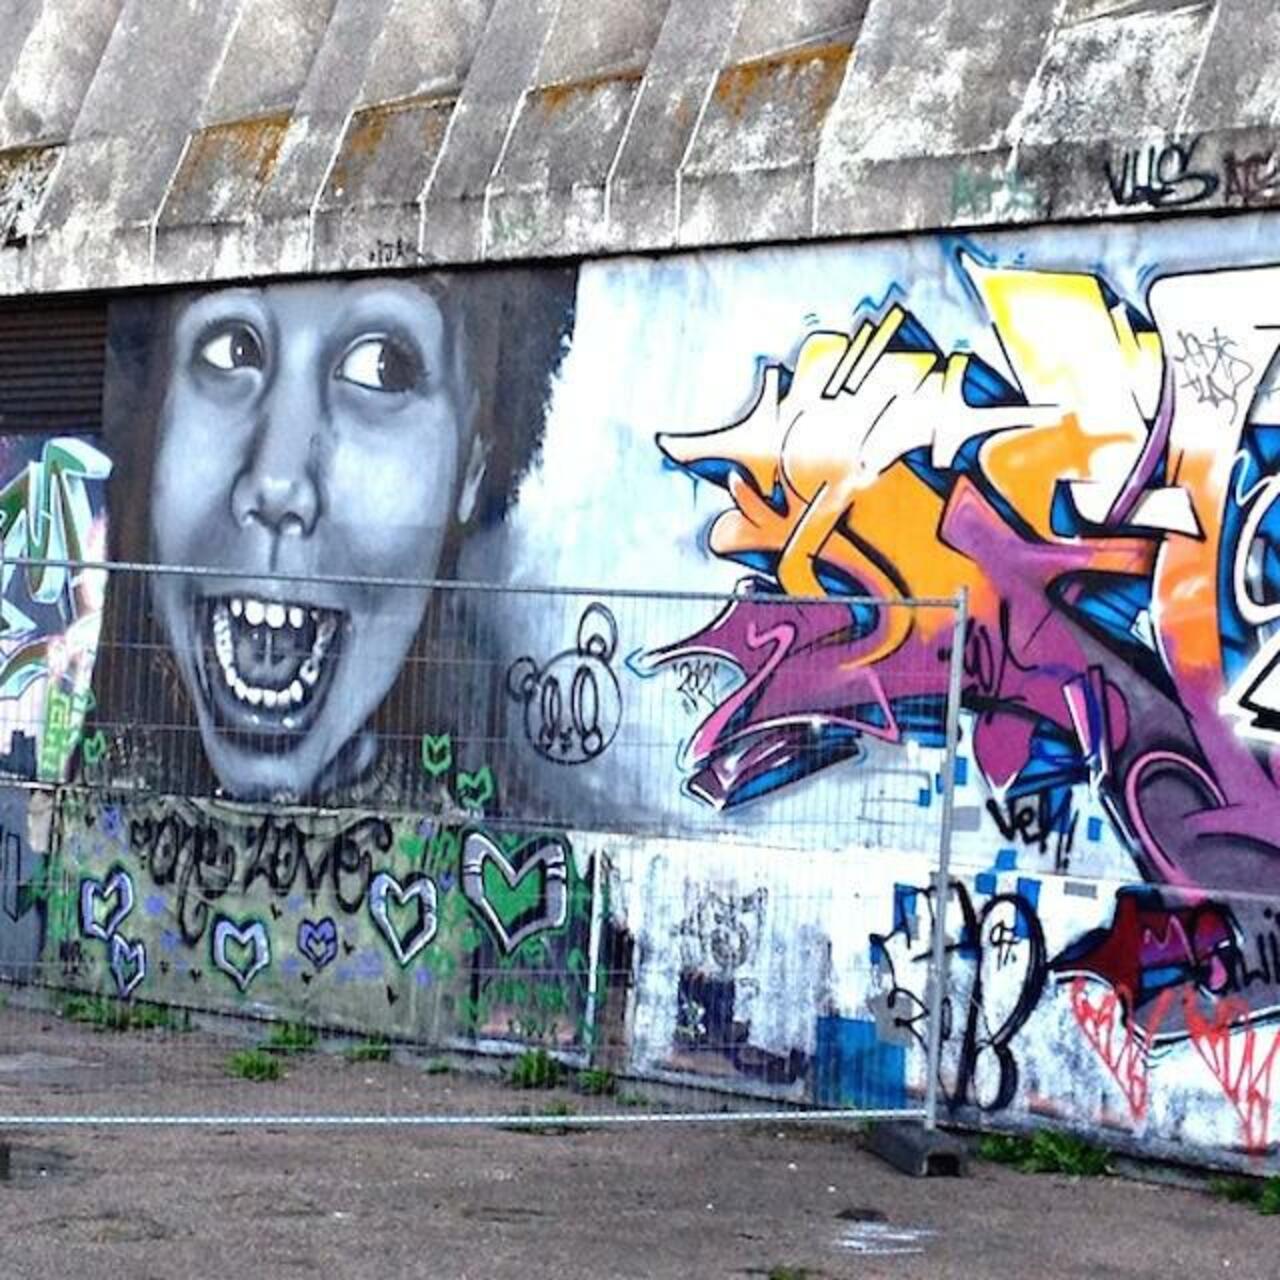 #ThatGreatMomentWhen you come across a piece of vandalism. #urbanart #graffiti #art http://t.co/DvIHmqs8Wb